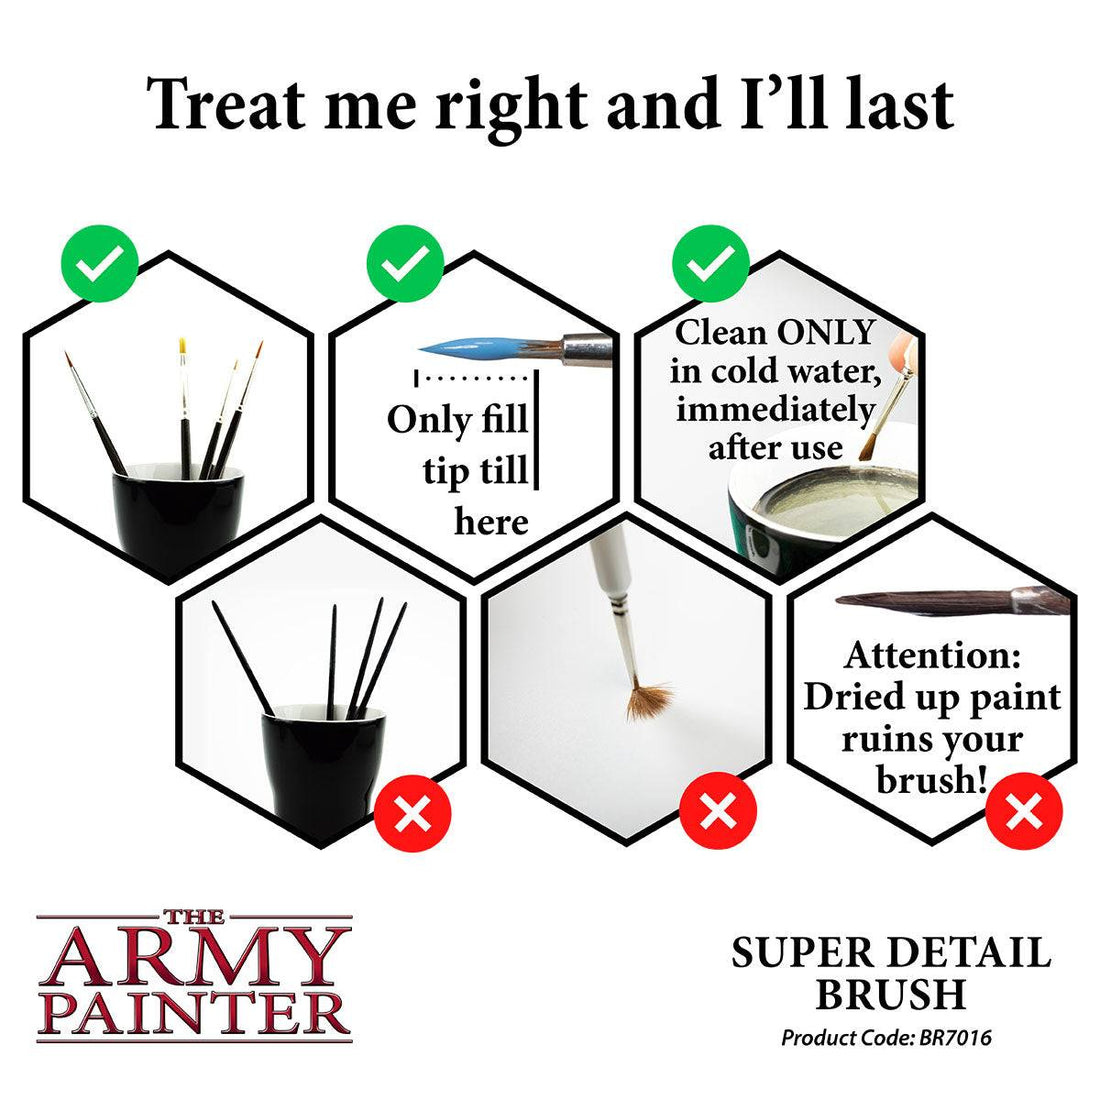 Army Painter: Brush: Hobby: Super Detail